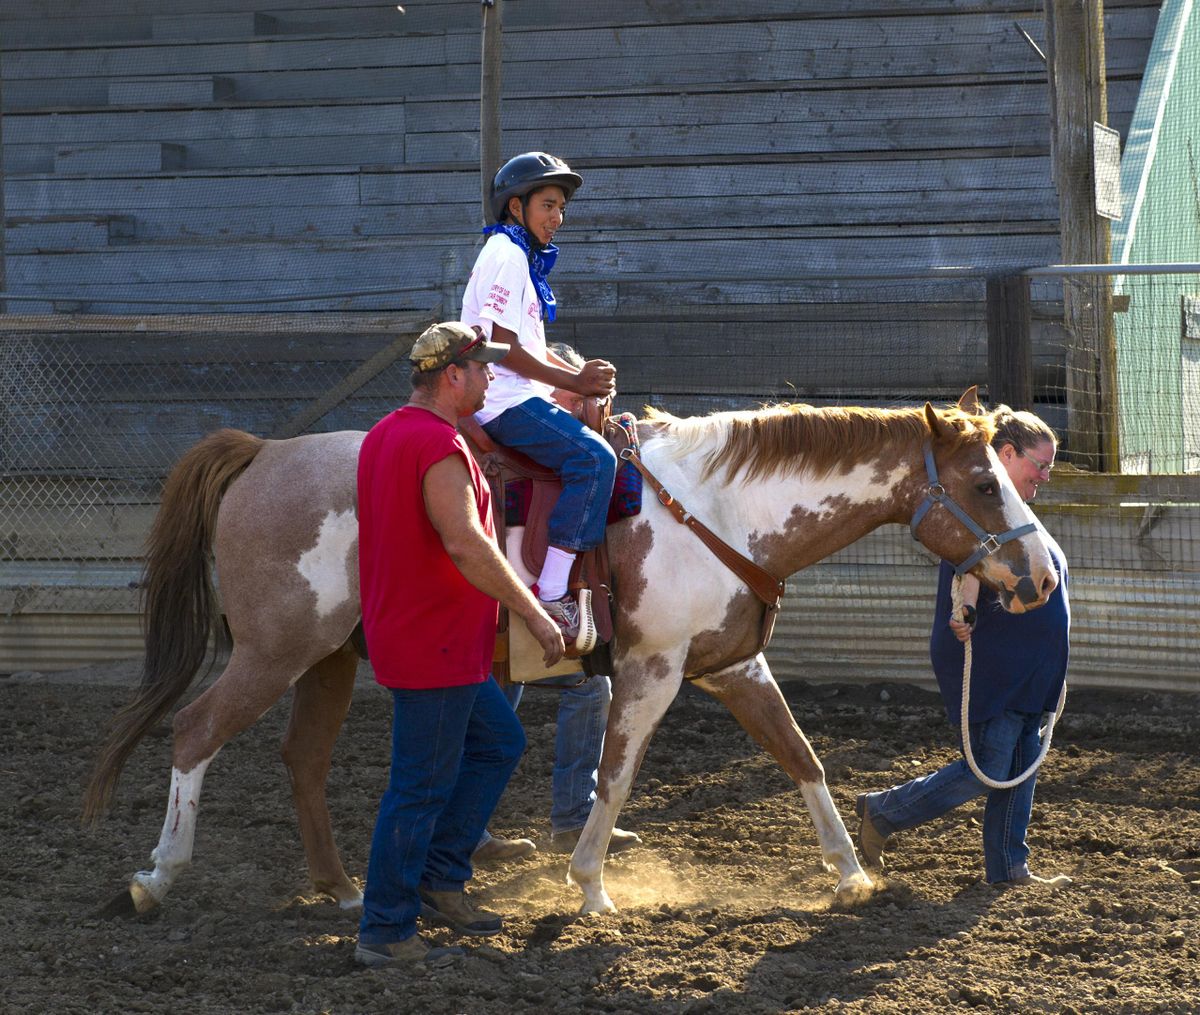 The Rascal Rodeo lands at Kootenai County Fairgrounds on Saturday. (Associated Press)